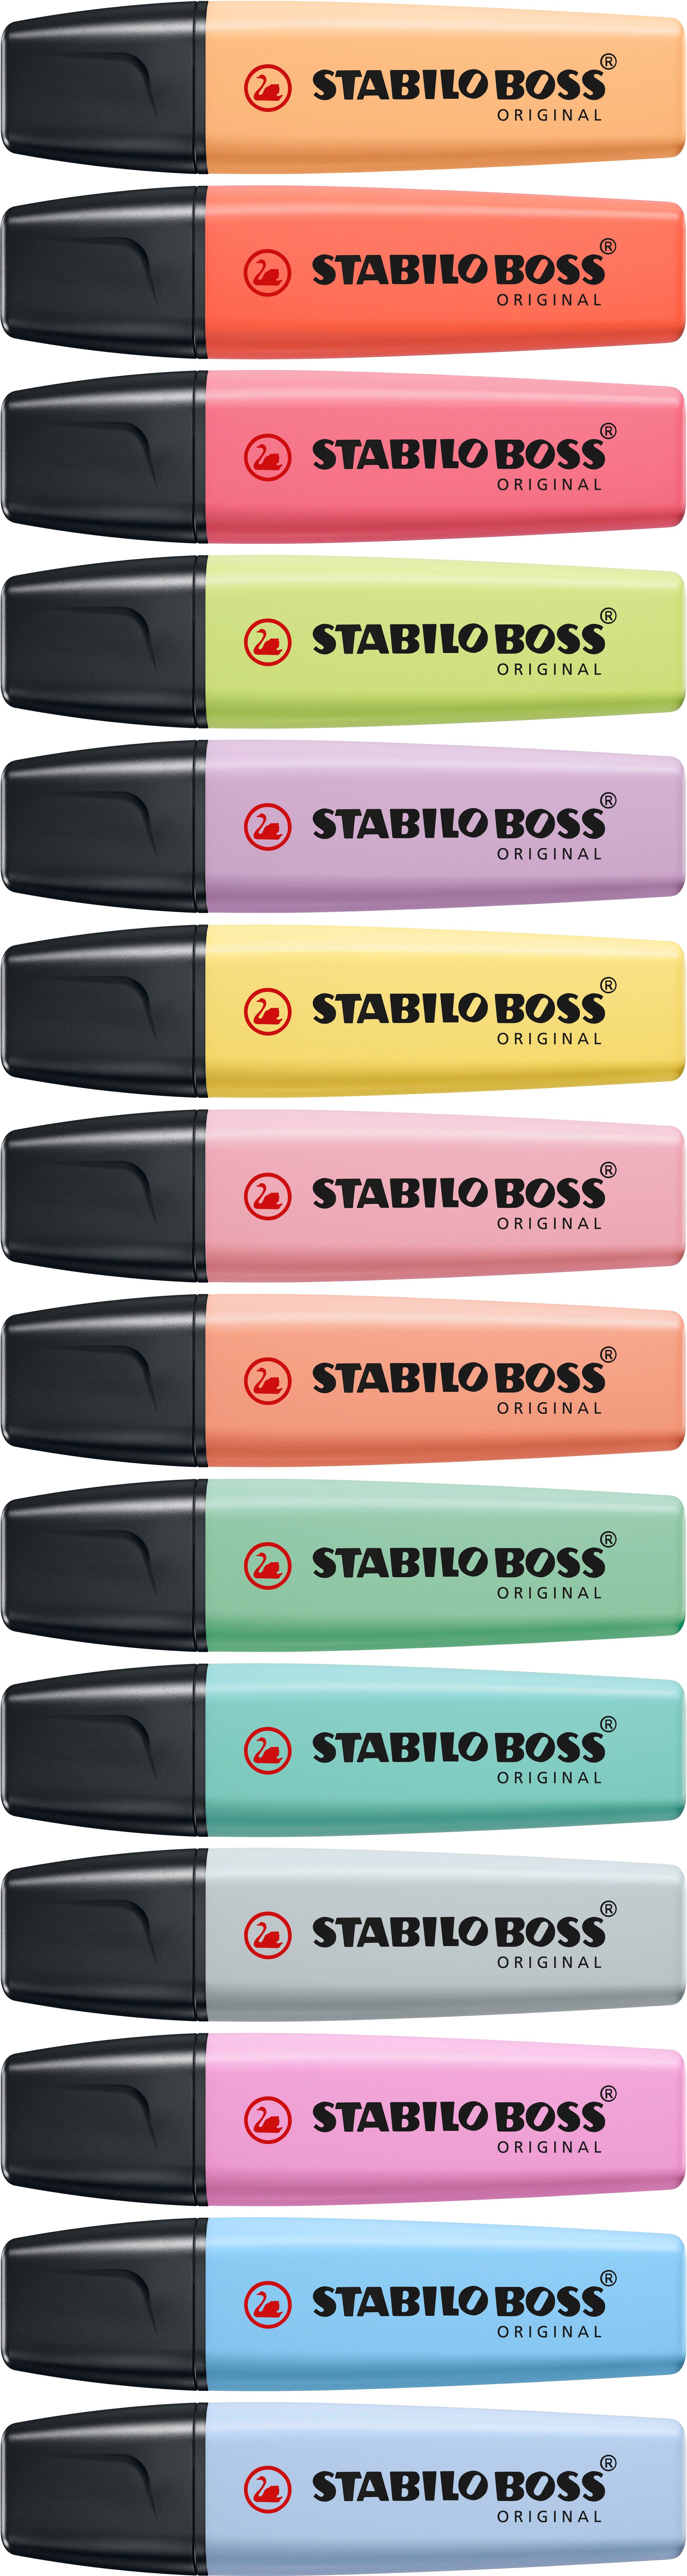 STABILO BOSS (plusieurs couleurs) – Paperole